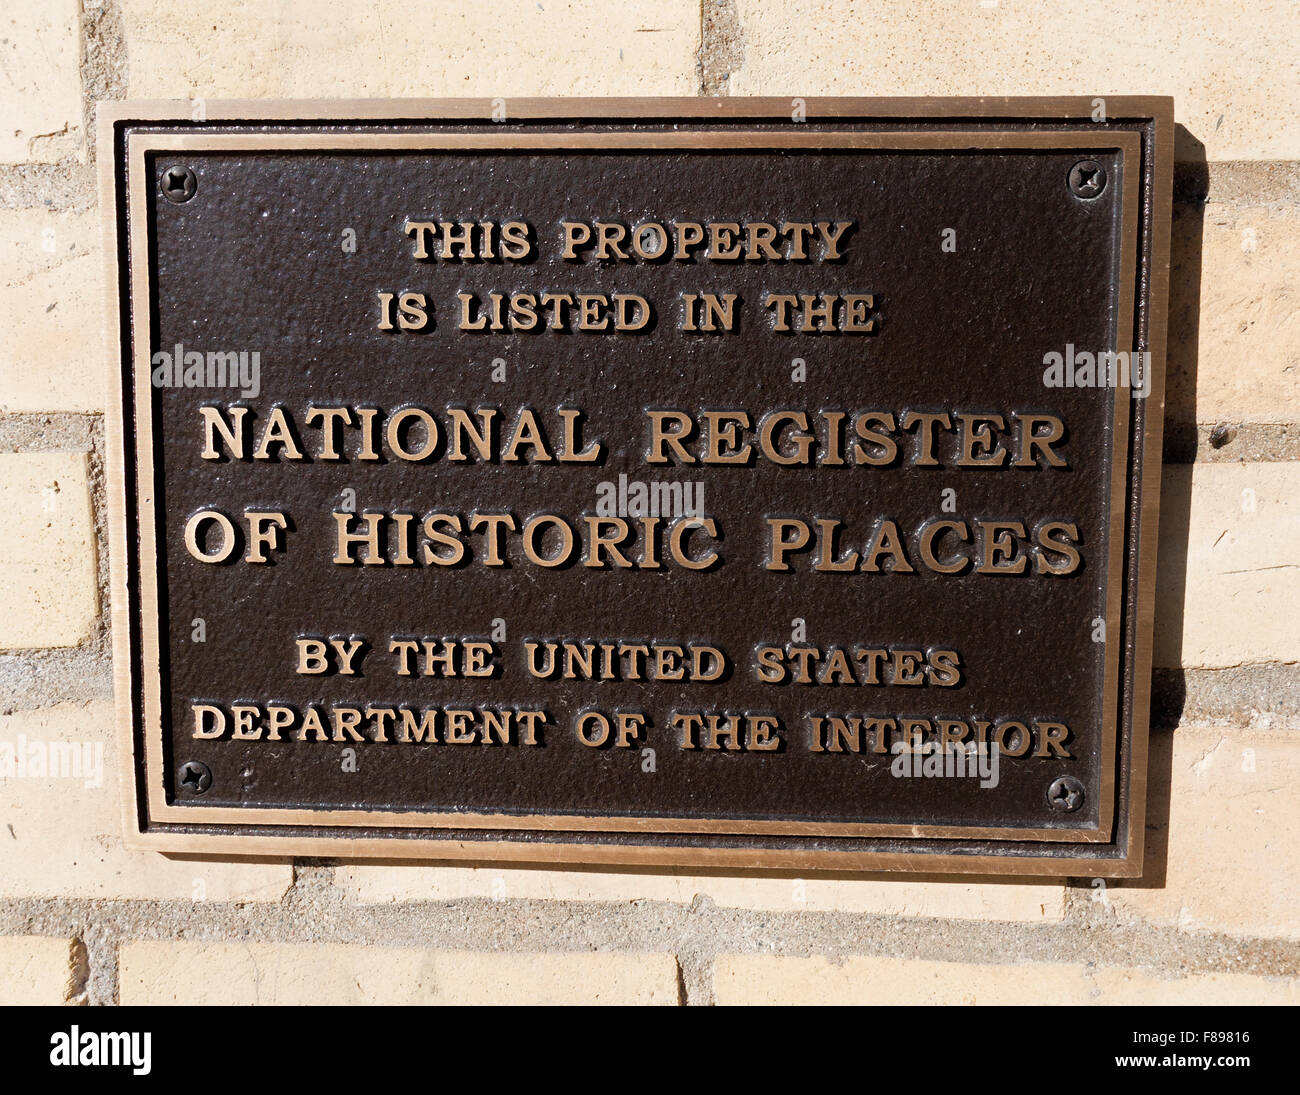 Fergus Falls regionale Behandlungszentrum ist im National Register of Historic Places. Geschlossene 2005. Fergus Falls Minnesota MN USA Stockfoto